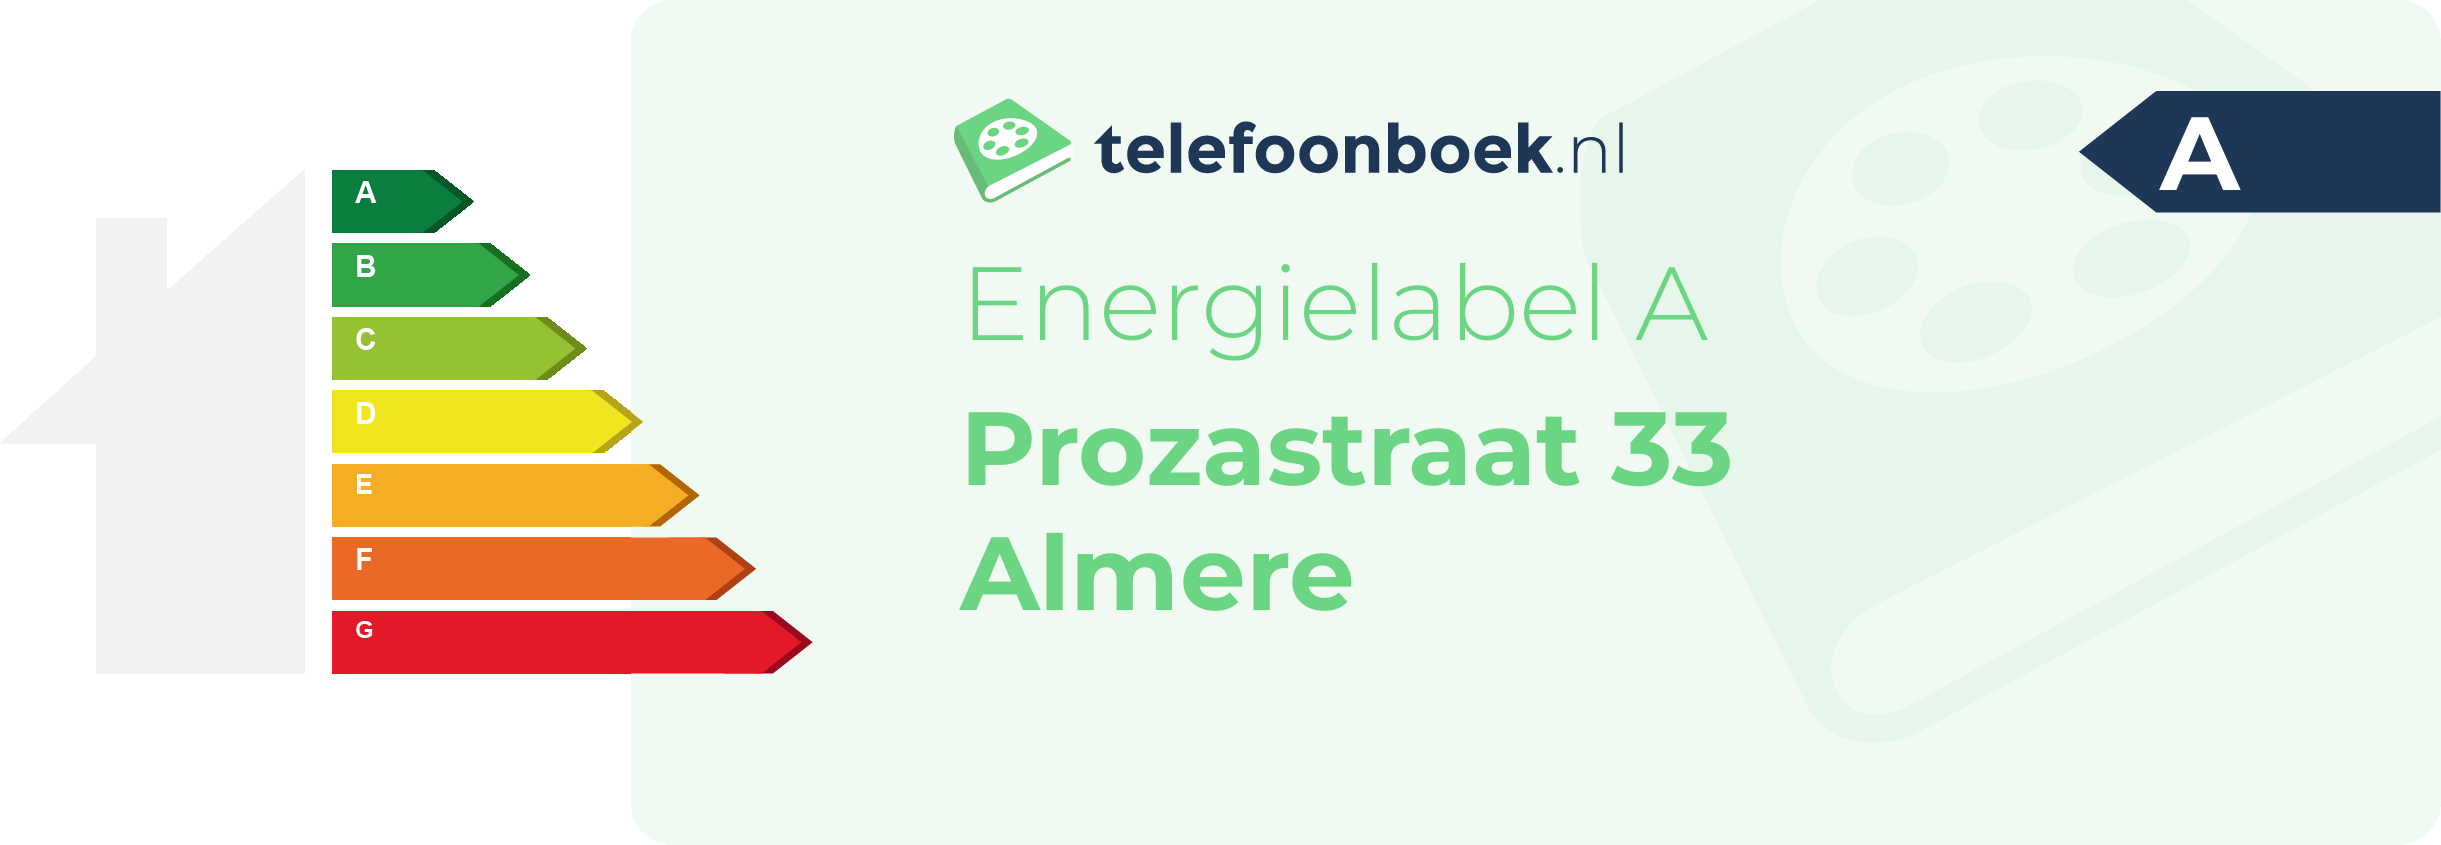 Energielabel Prozastraat 33 Almere